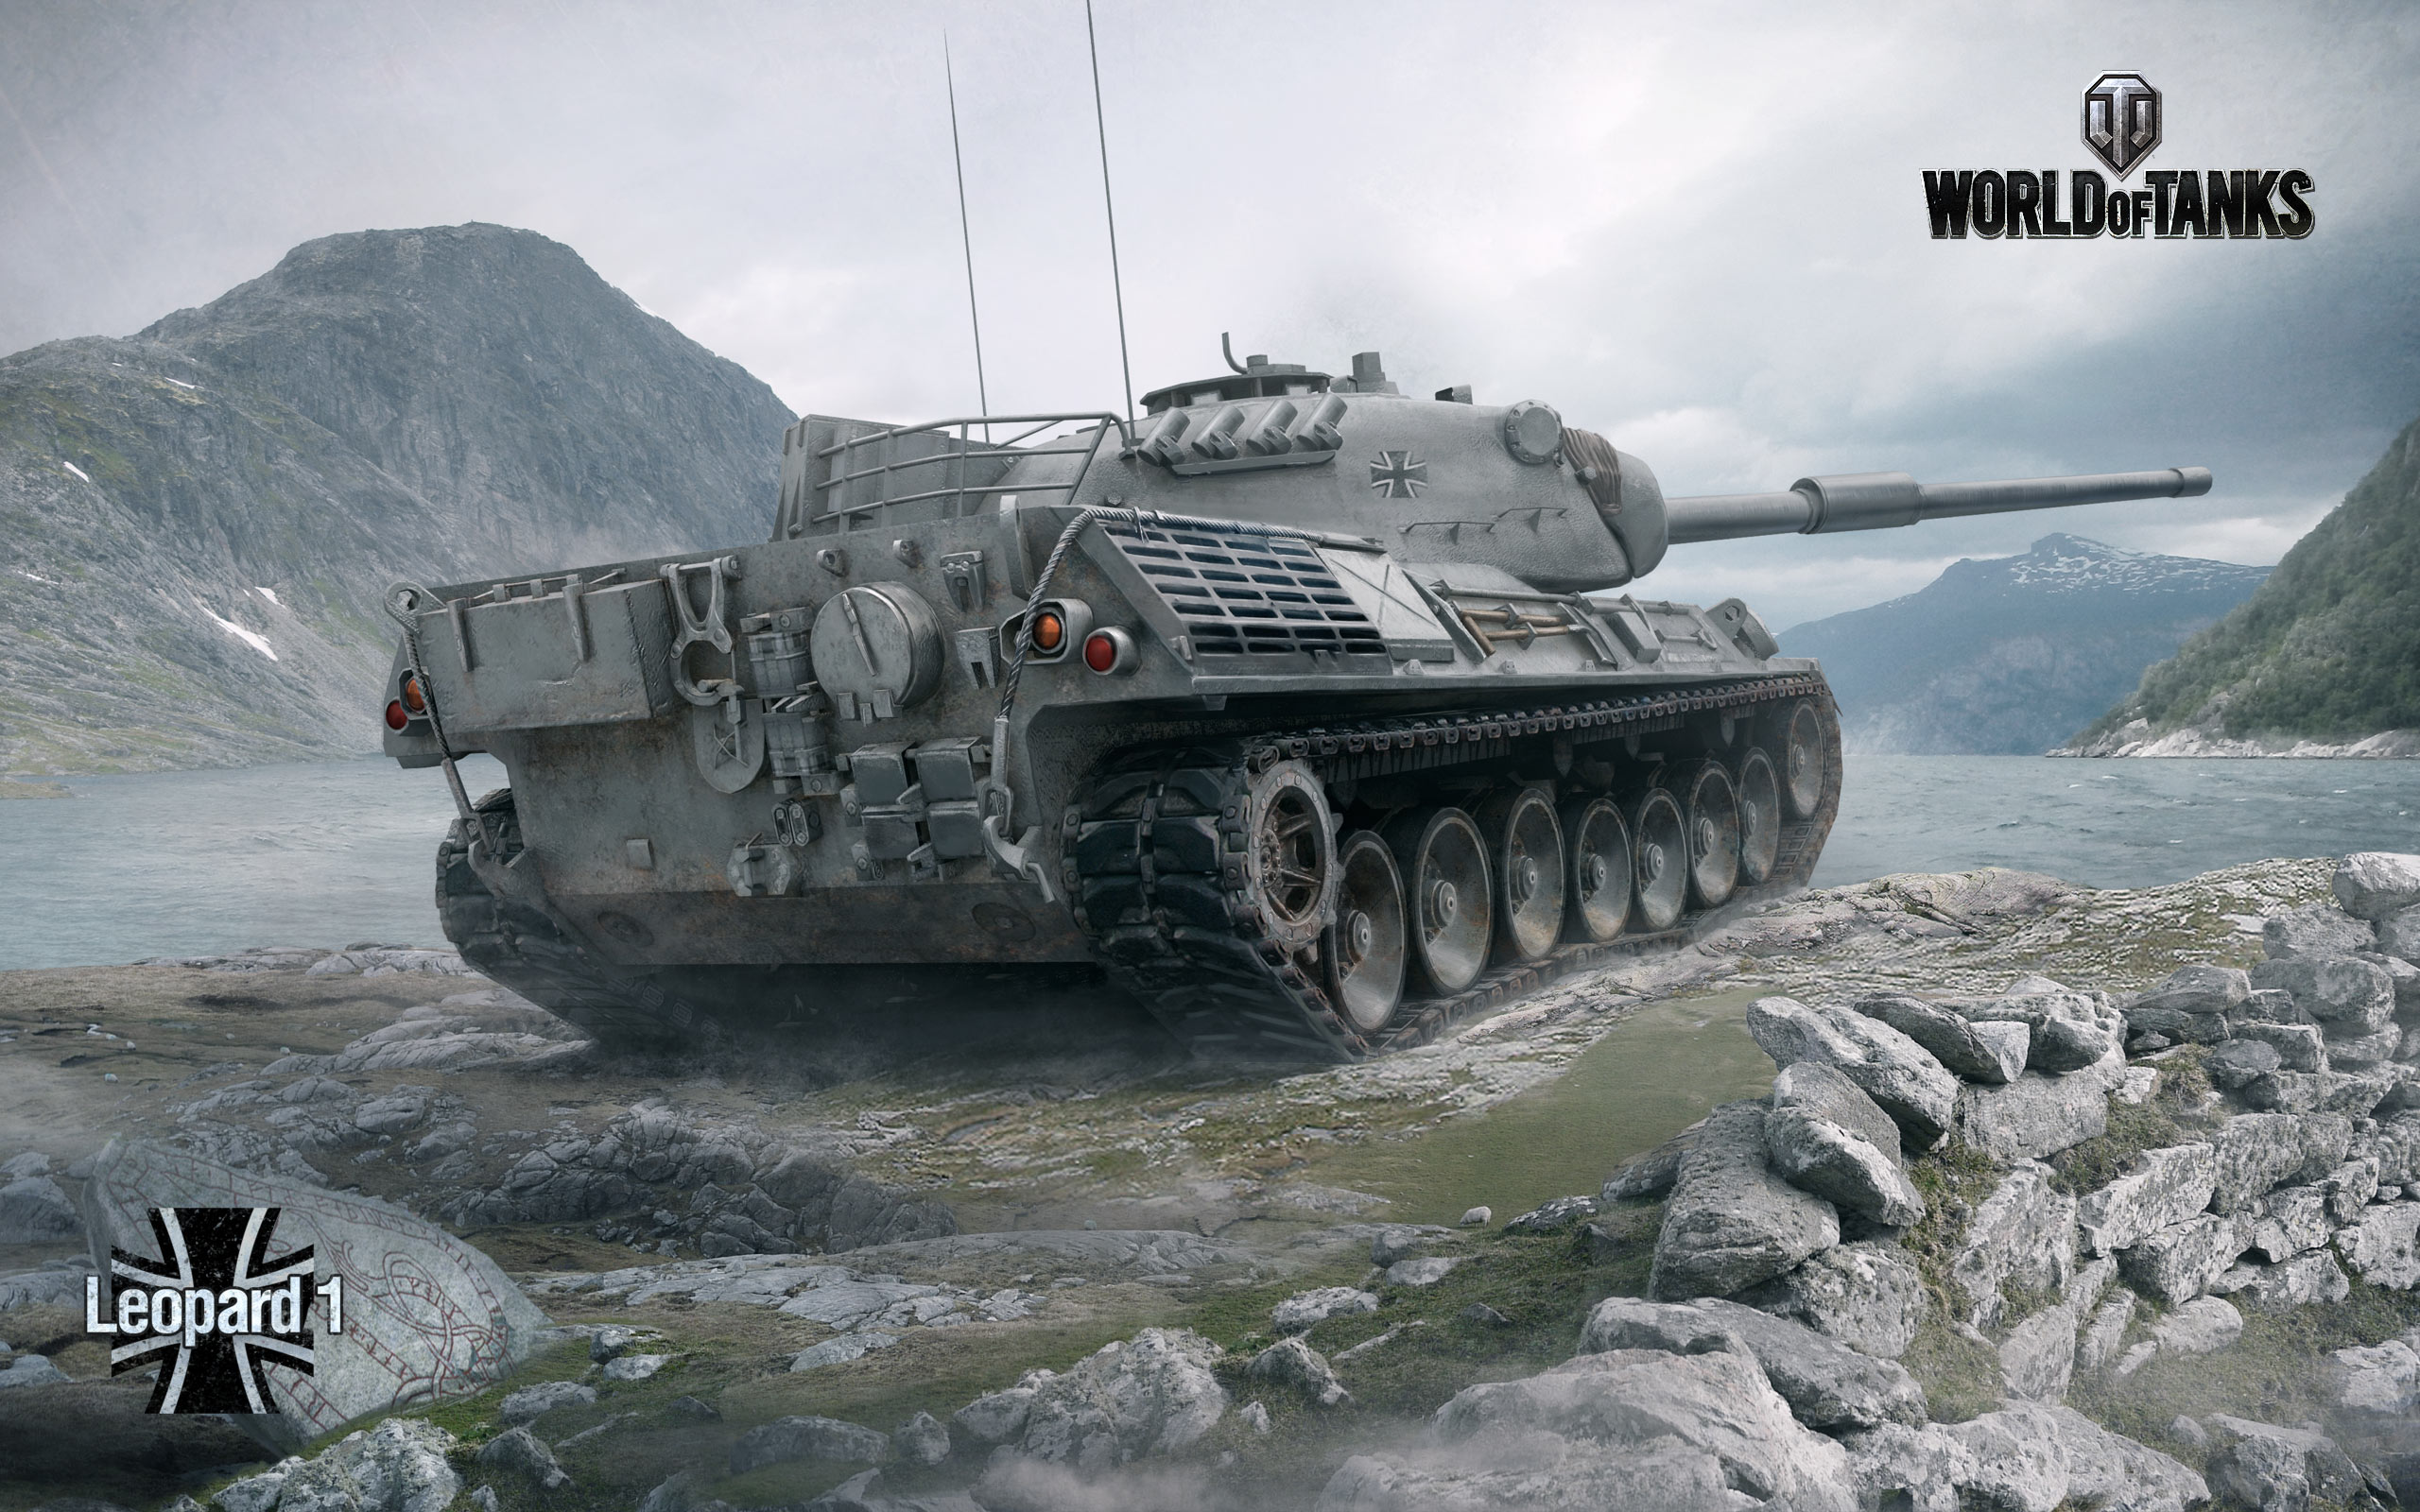 world of tanks wallpaper,combat vehicle,tank,churchill tank,vehicle,strategy video game